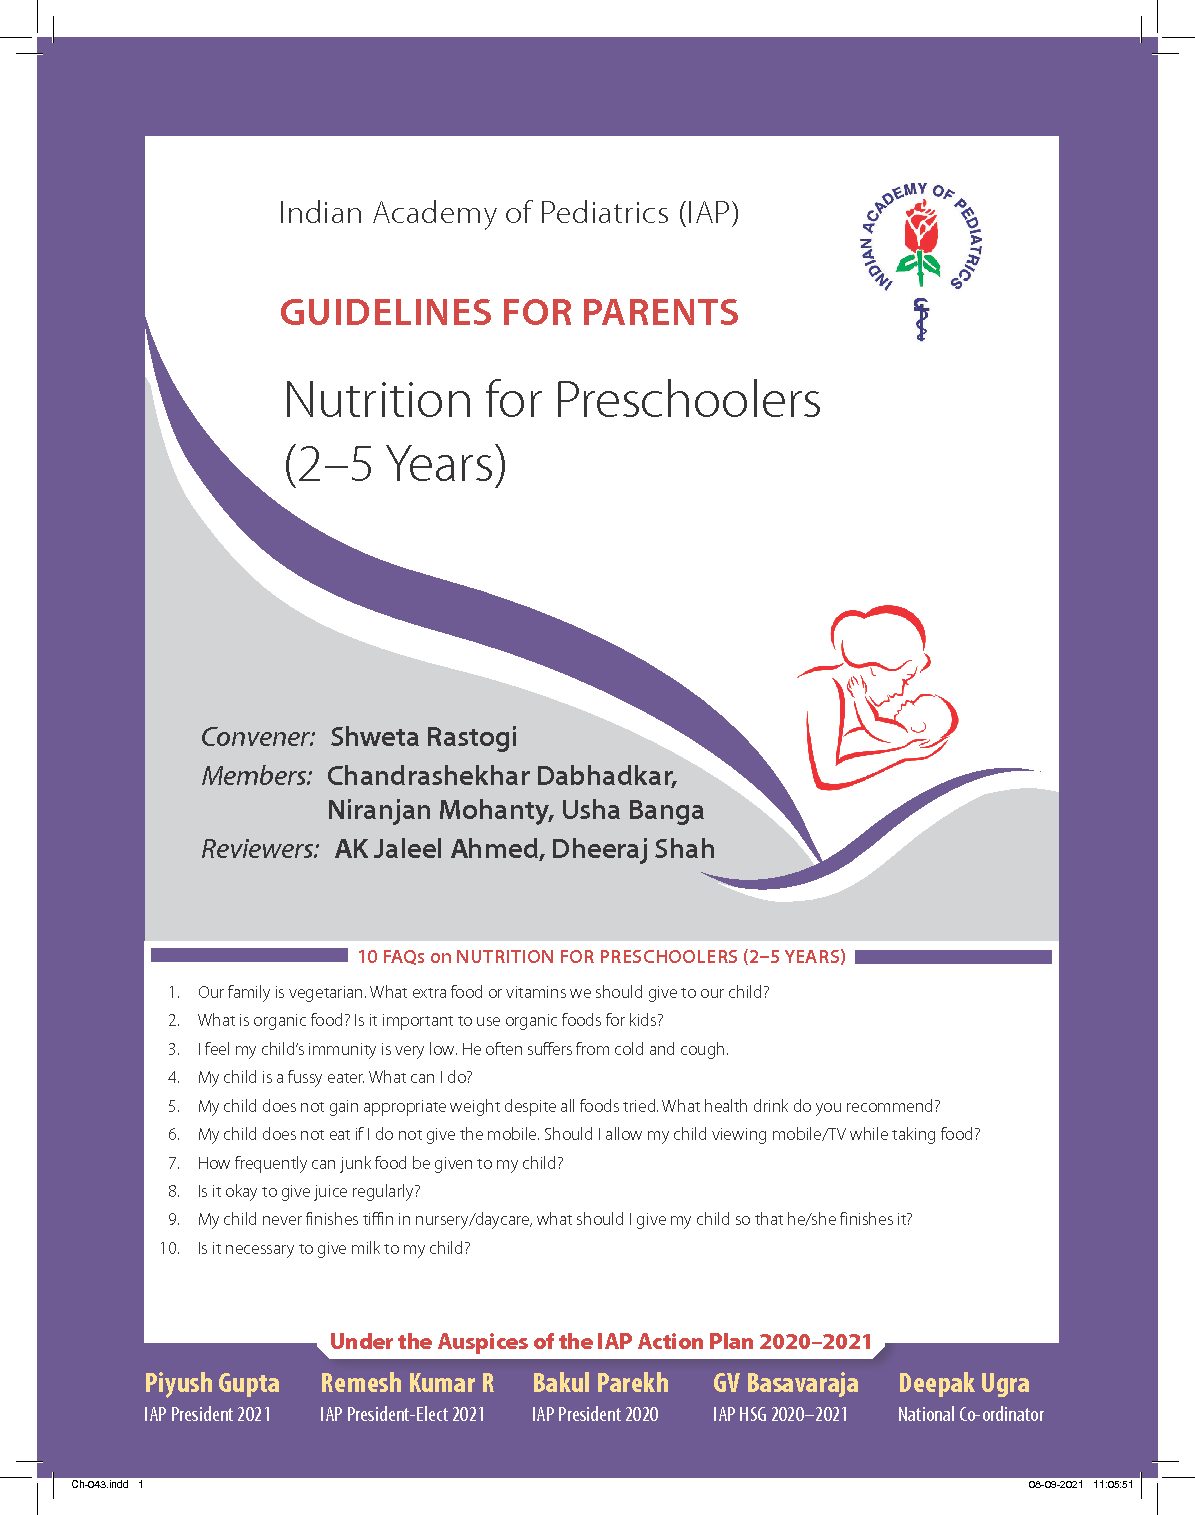 Ch-043Nutrition-2-5y-IAP-Parental-Guidelines-1-pdf.jpg